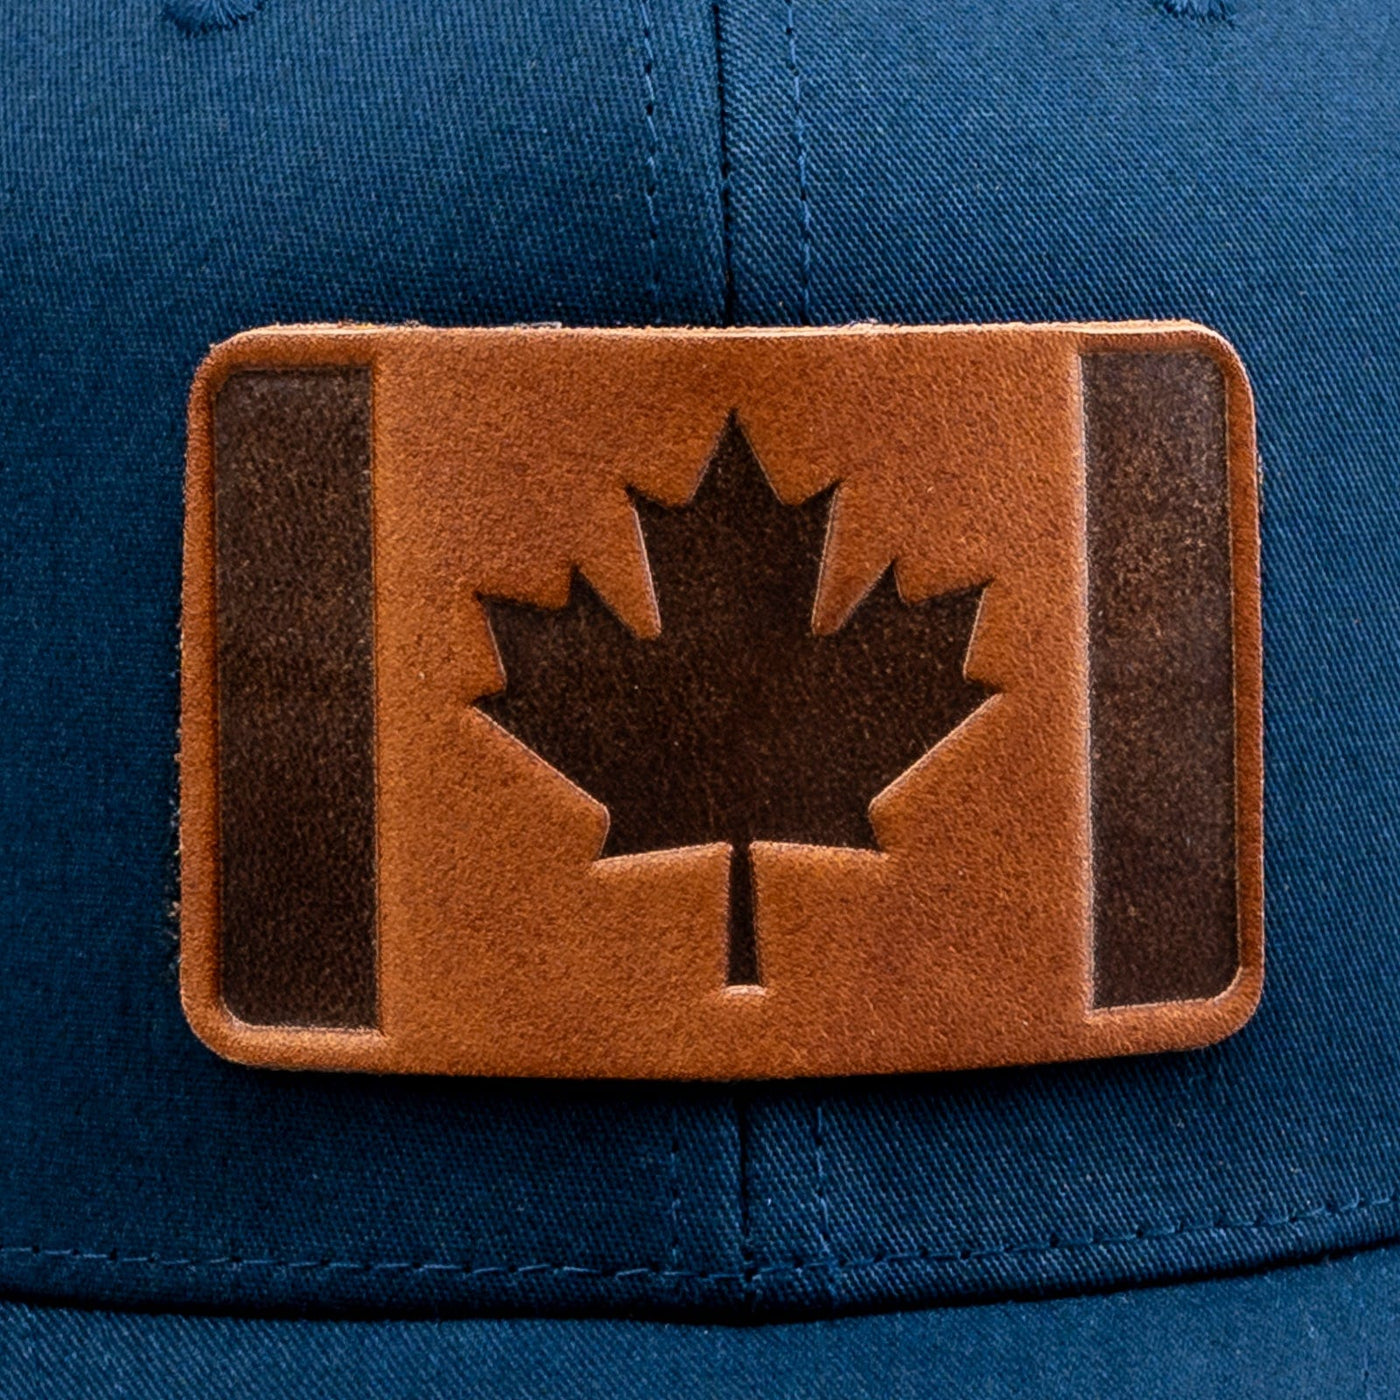 Canadian Flag Hat Popov Leather®